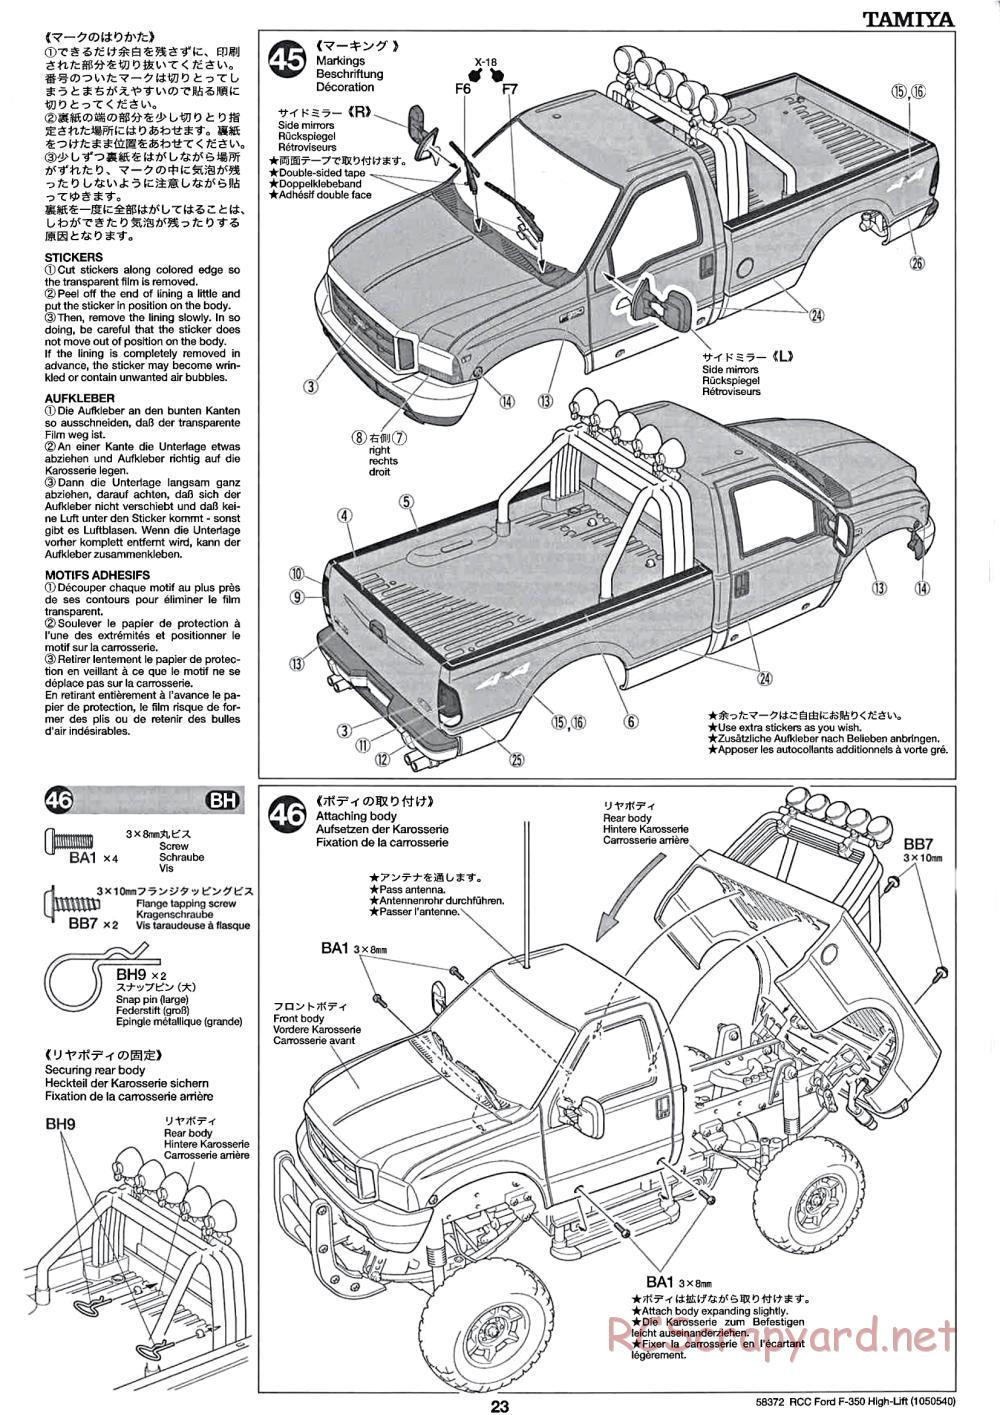 Tamiya - Ford F350 High-Lift Chassis - Manual - Page 23